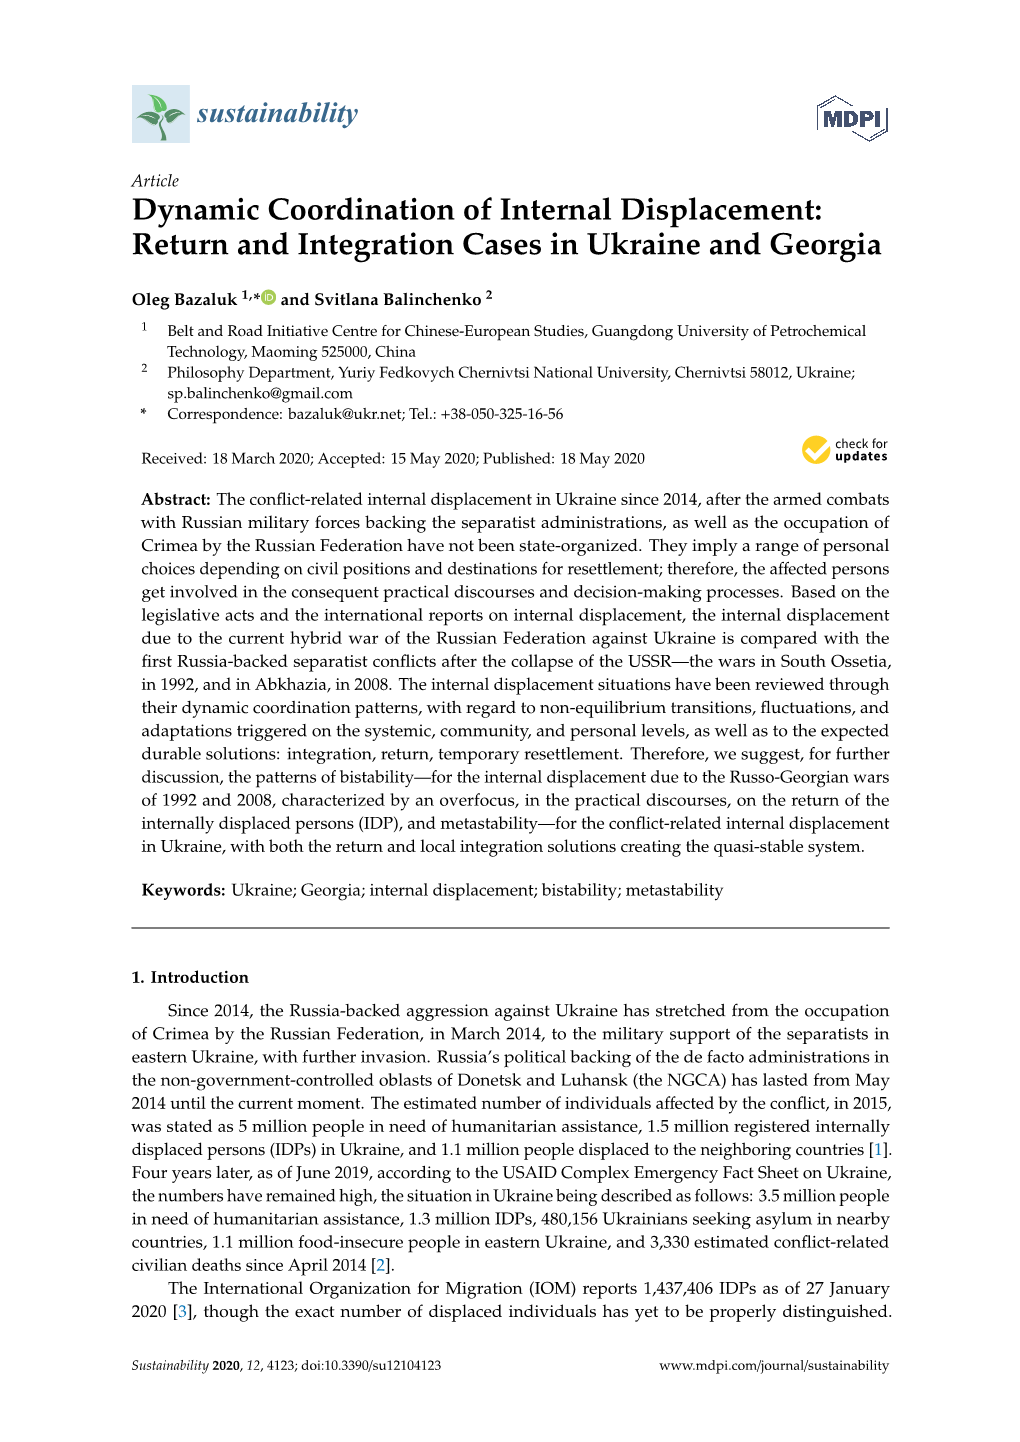 Return and Integration Cases in Ukraine and Georgia